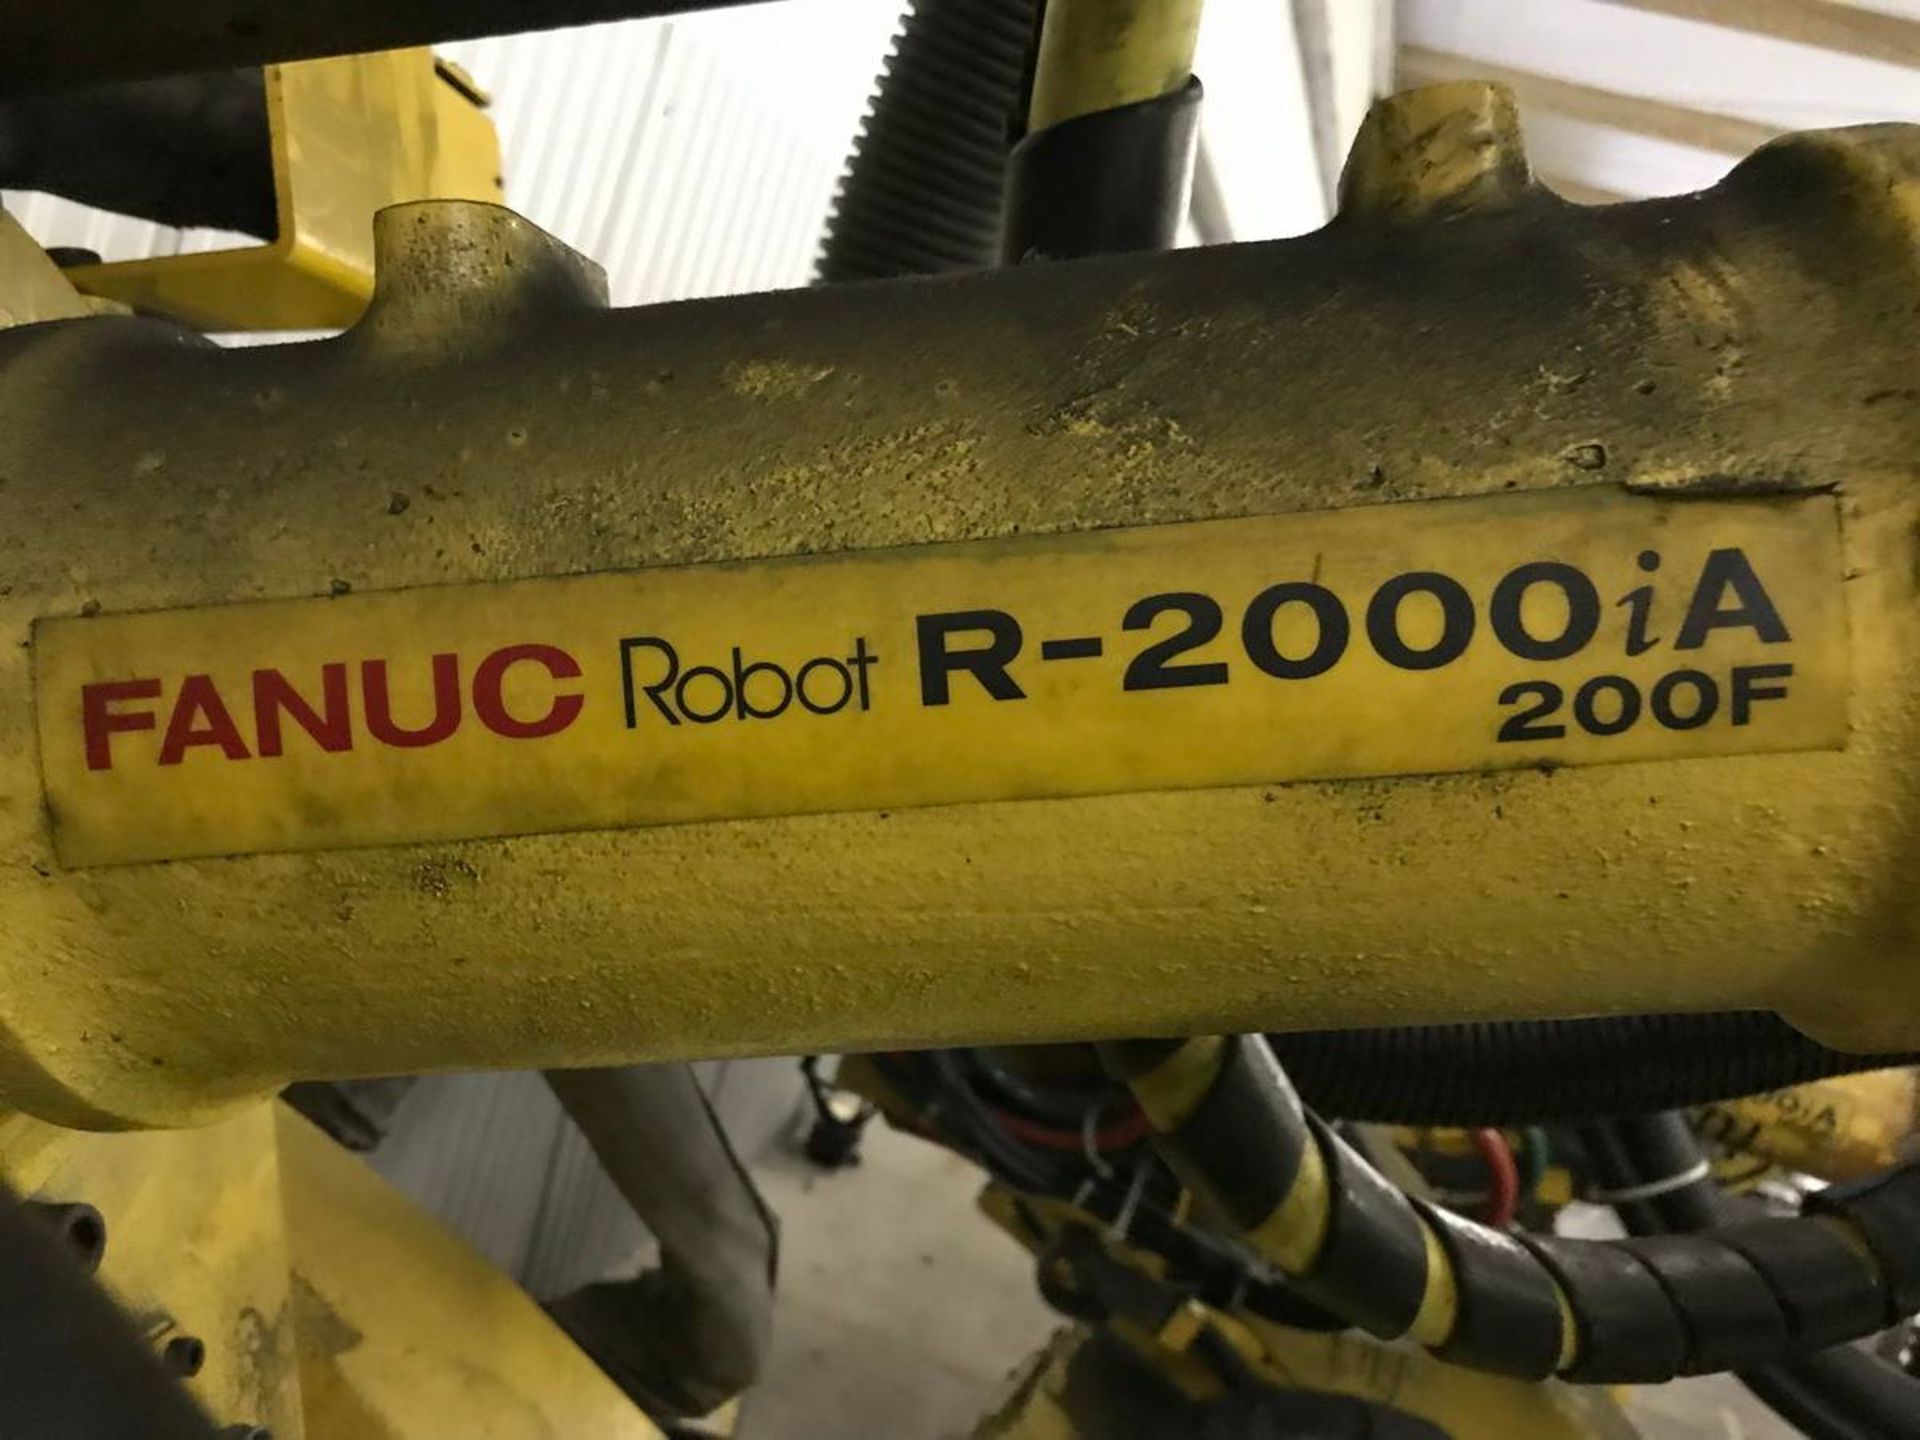 Fanuc R-2000IA 200F Robot